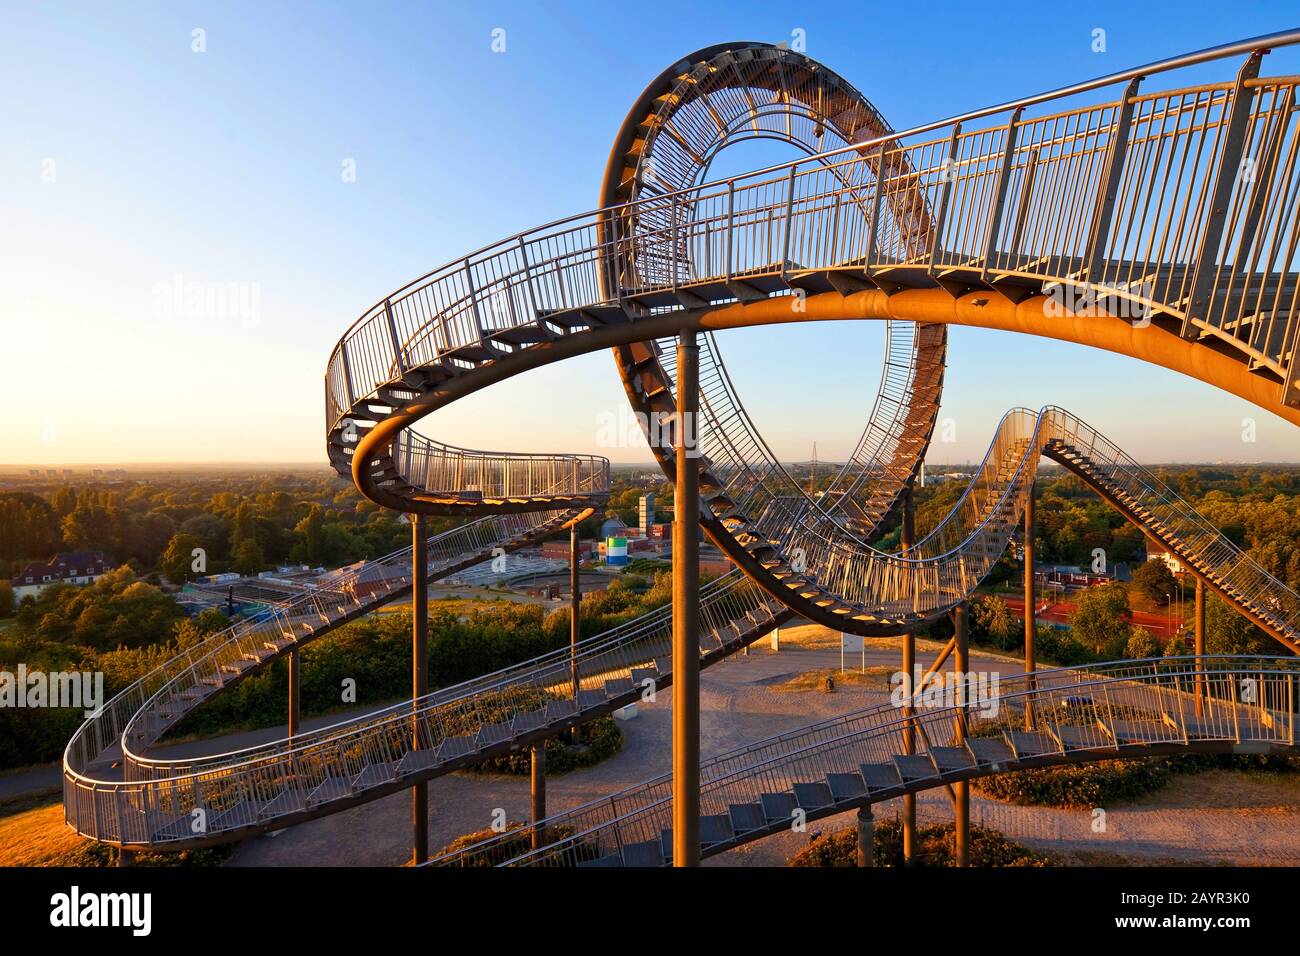 Walkable Roller-Coaster Sculpture Opens in Germany